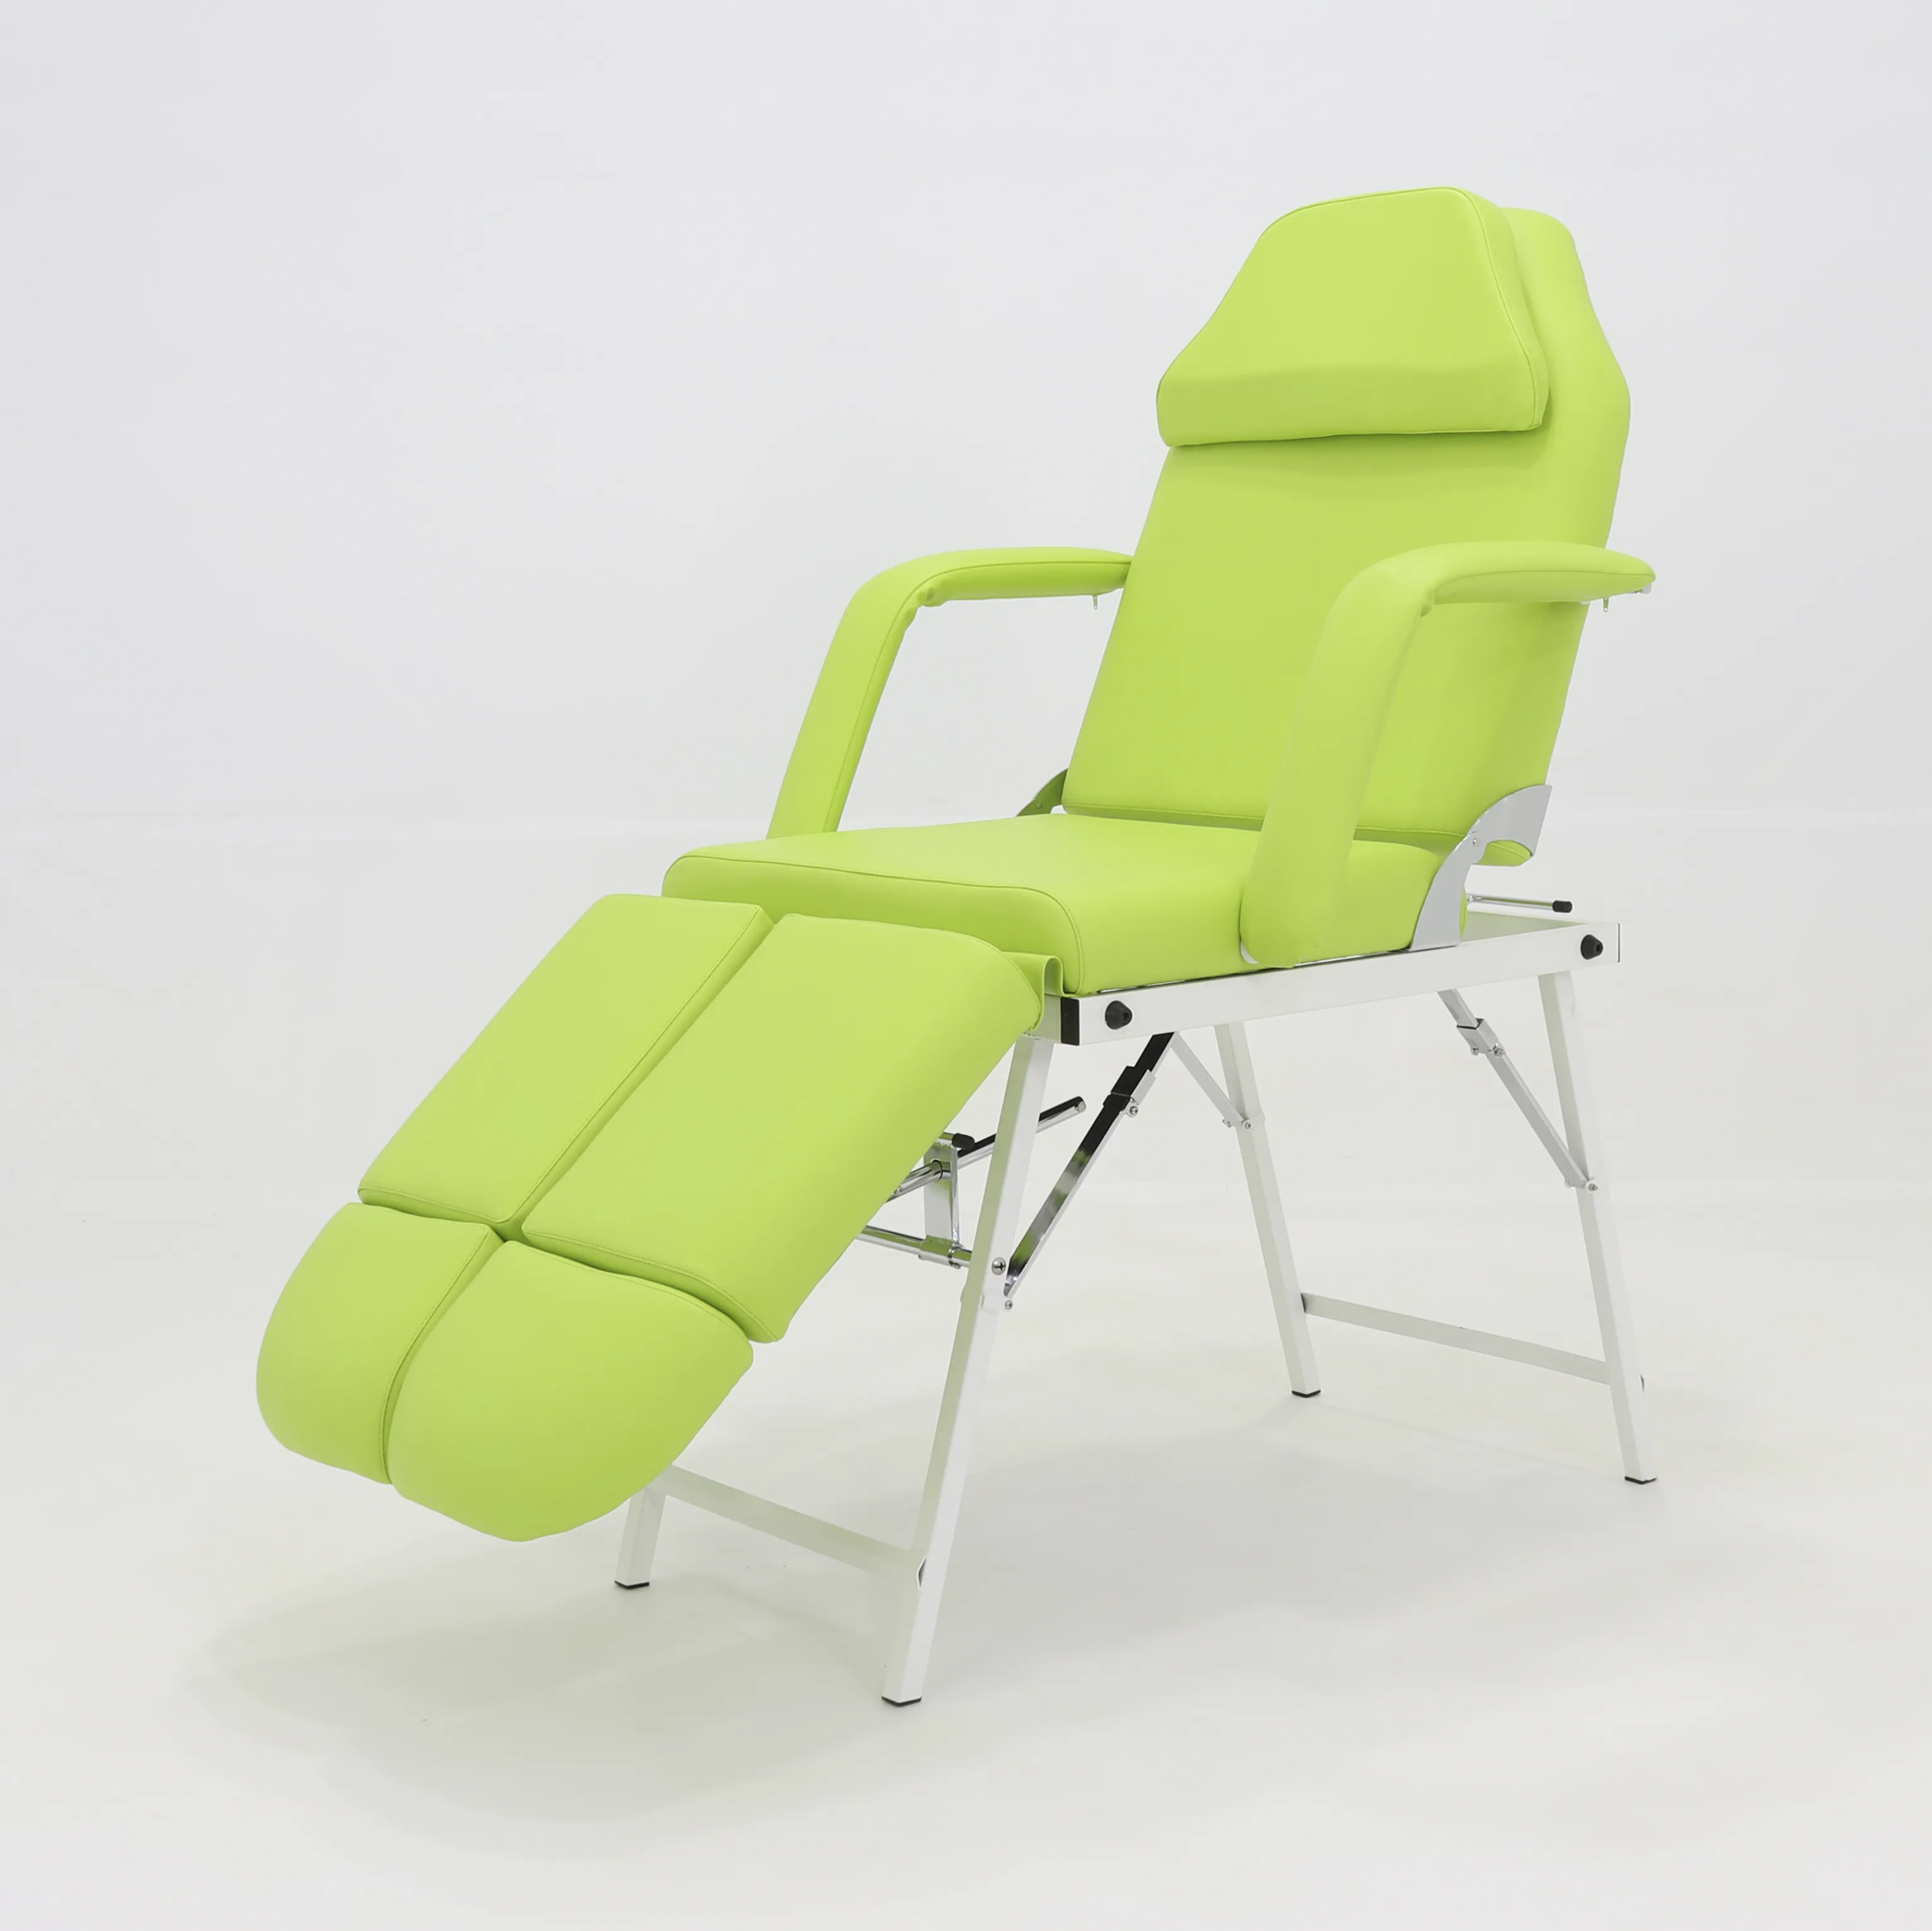 Педикюрное кресло-стол JF-Madvanta (KO-162) (FIX-2A (SS4.01.10)) - 4 